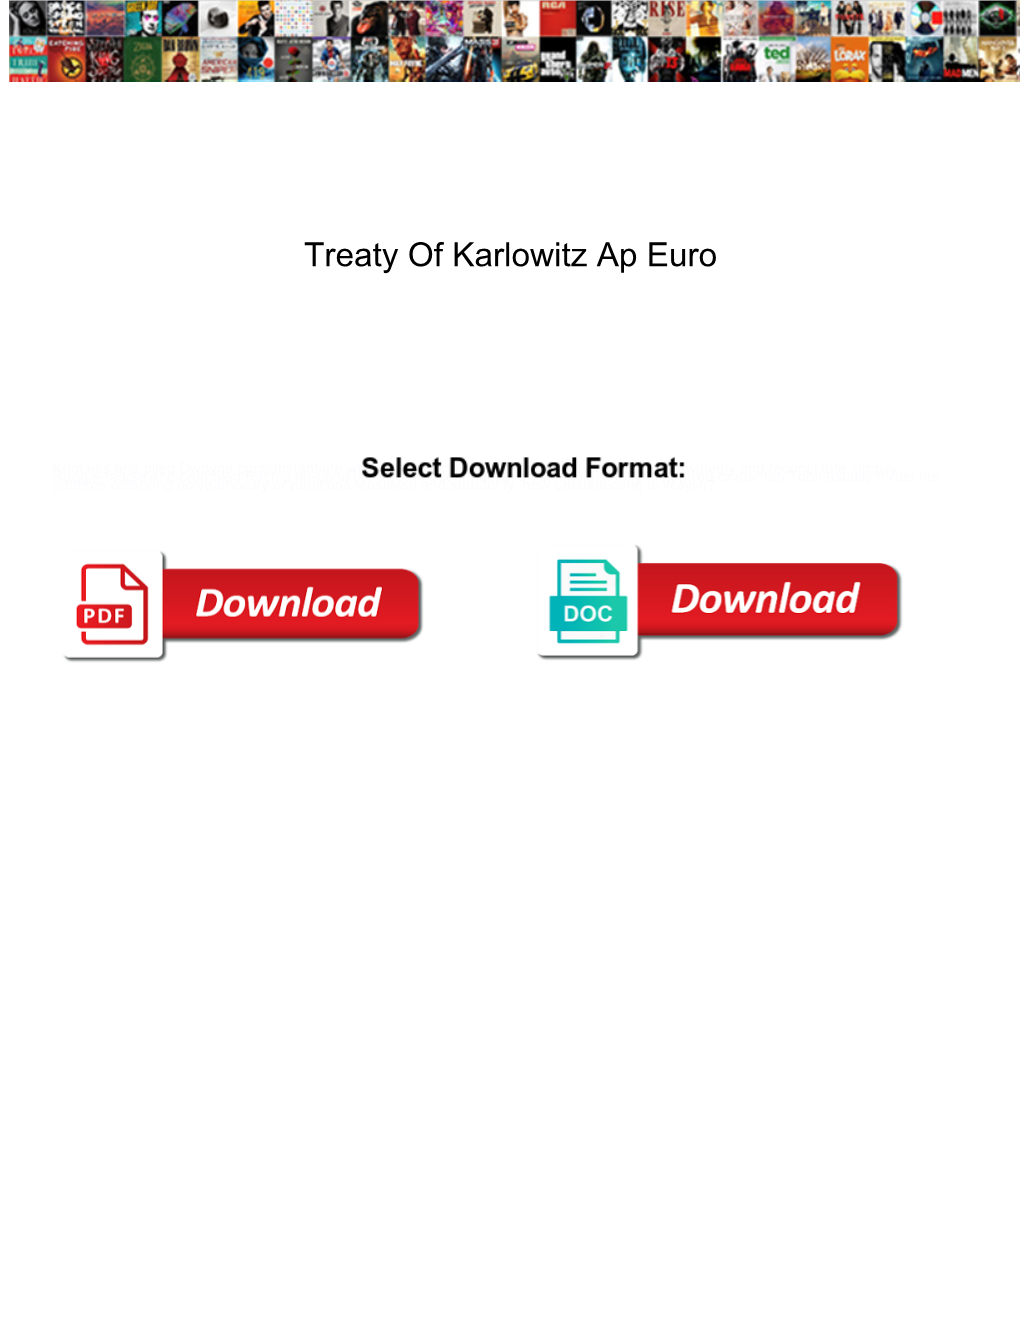 Treaty of Karlowitz Ap Euro